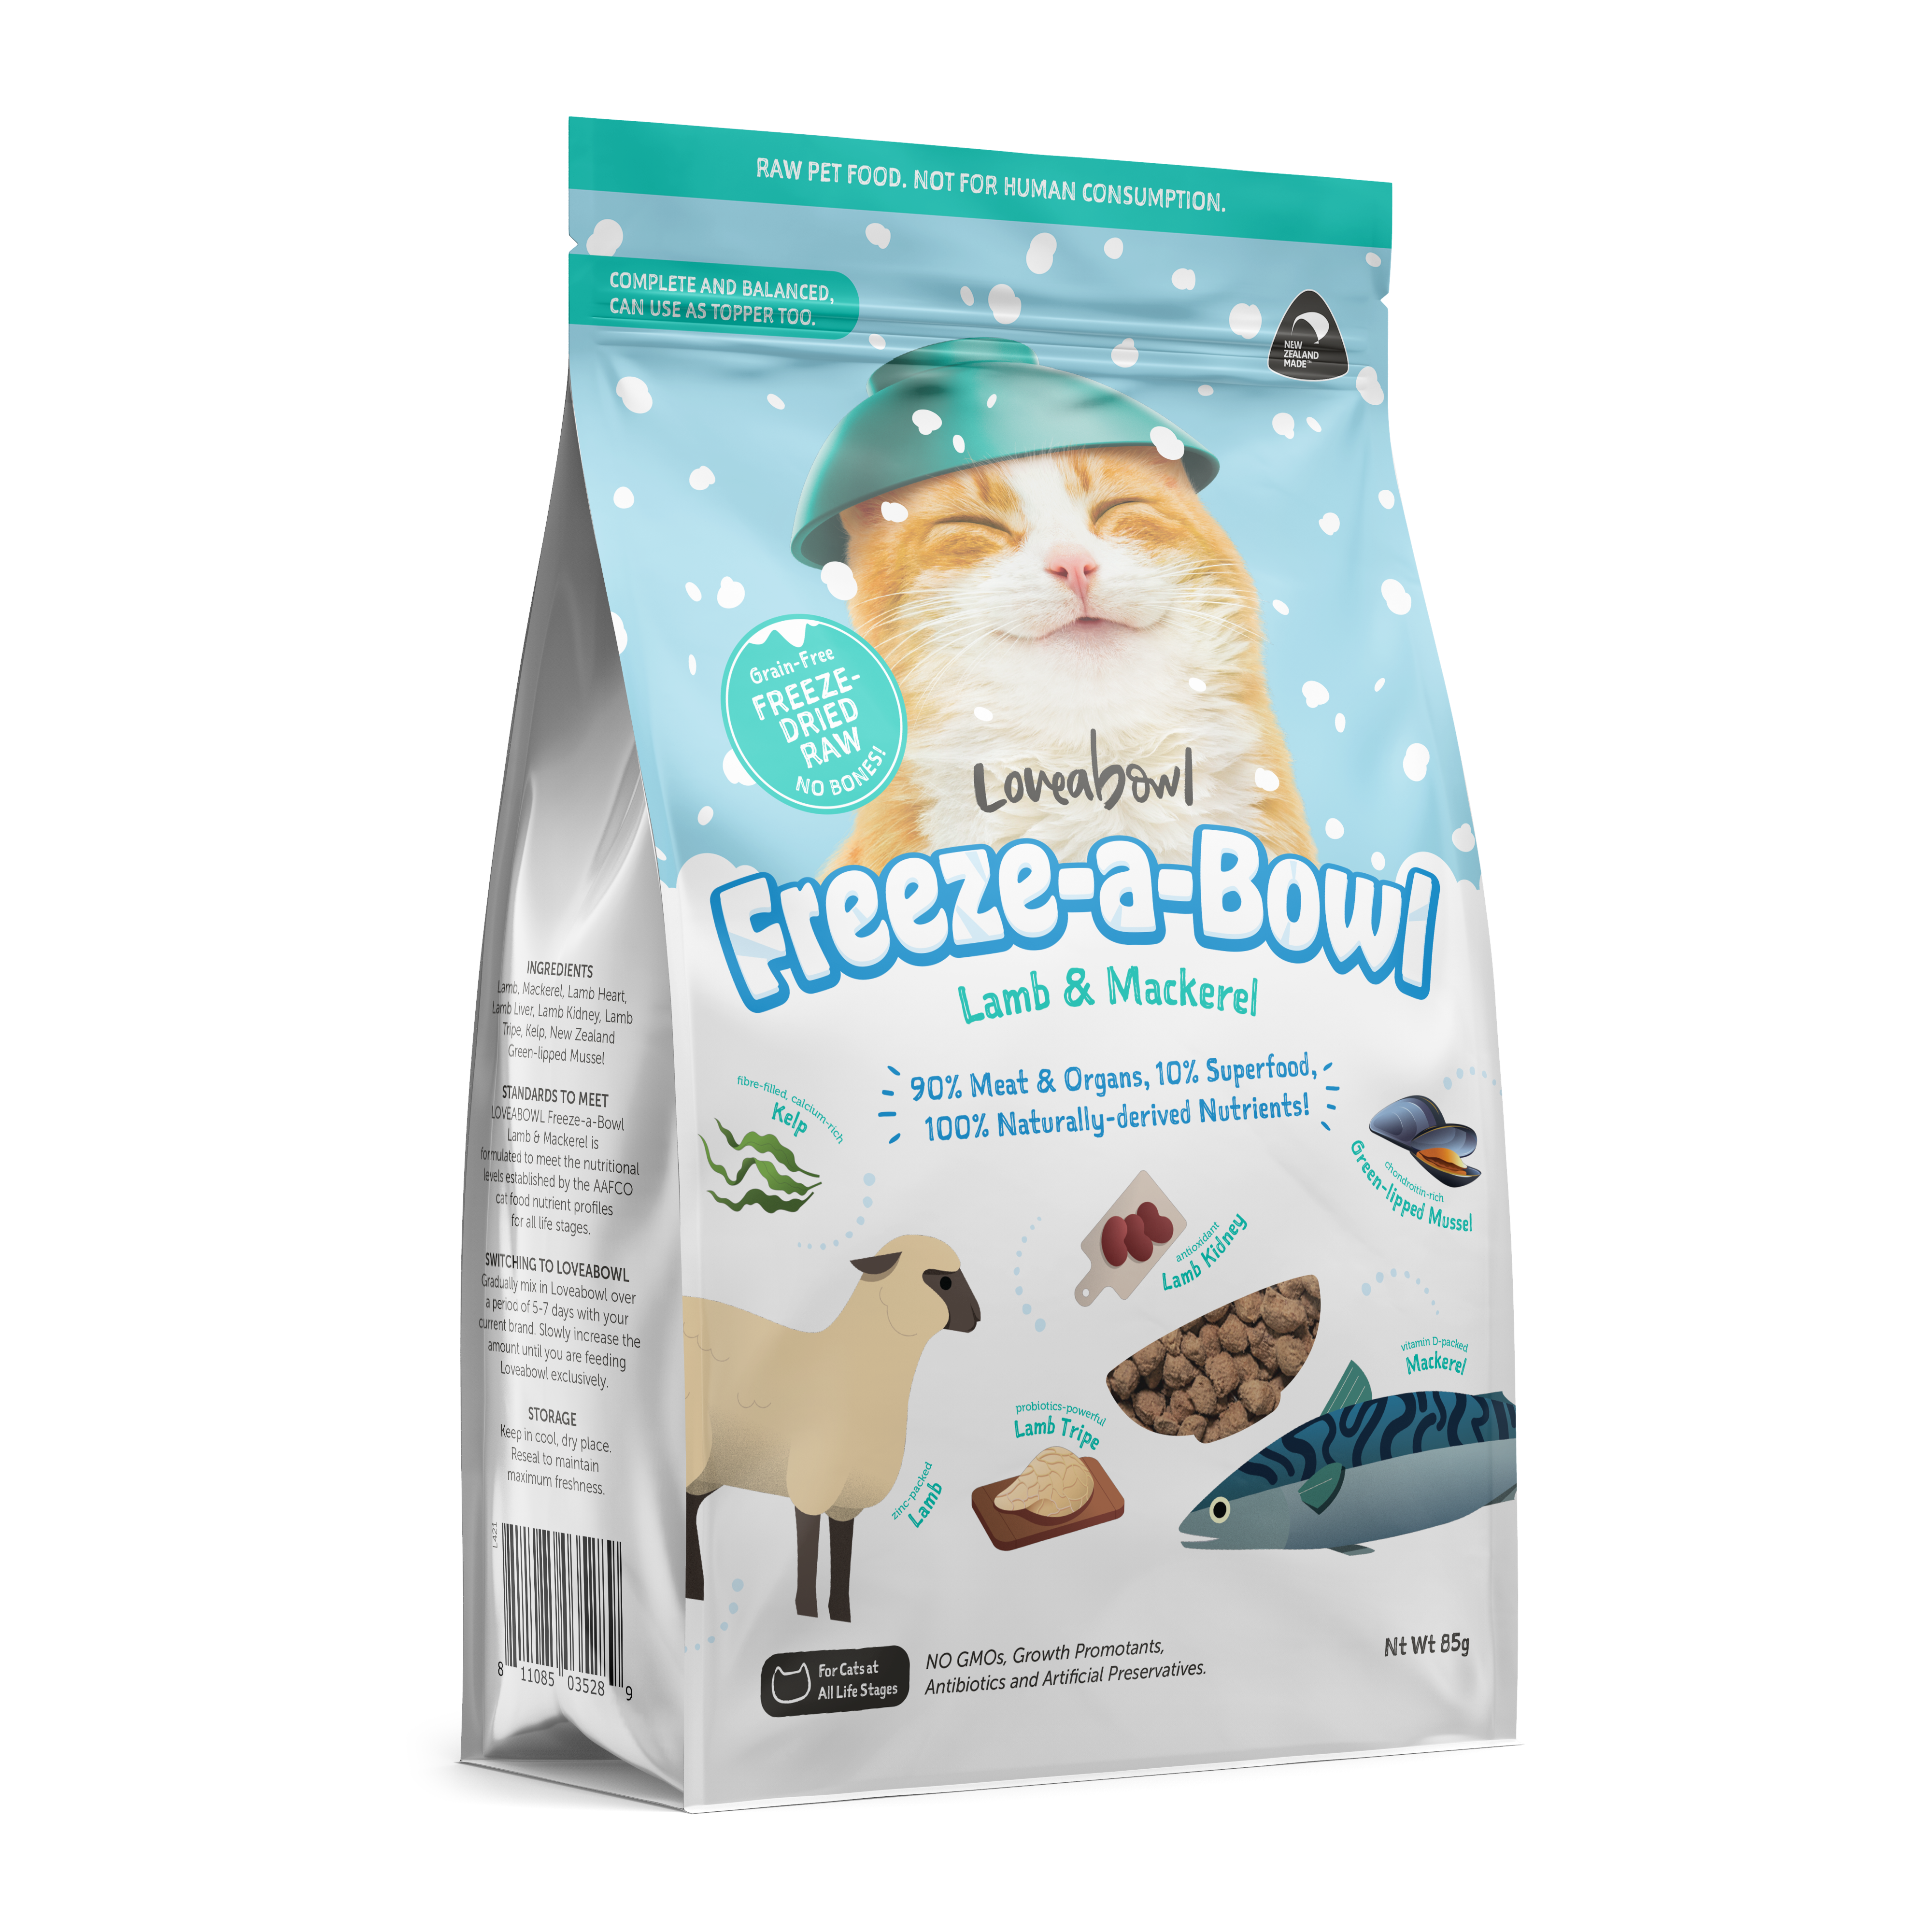 Loveabowl Freeze-a-Bowl Lamb & Mackerel for Cats